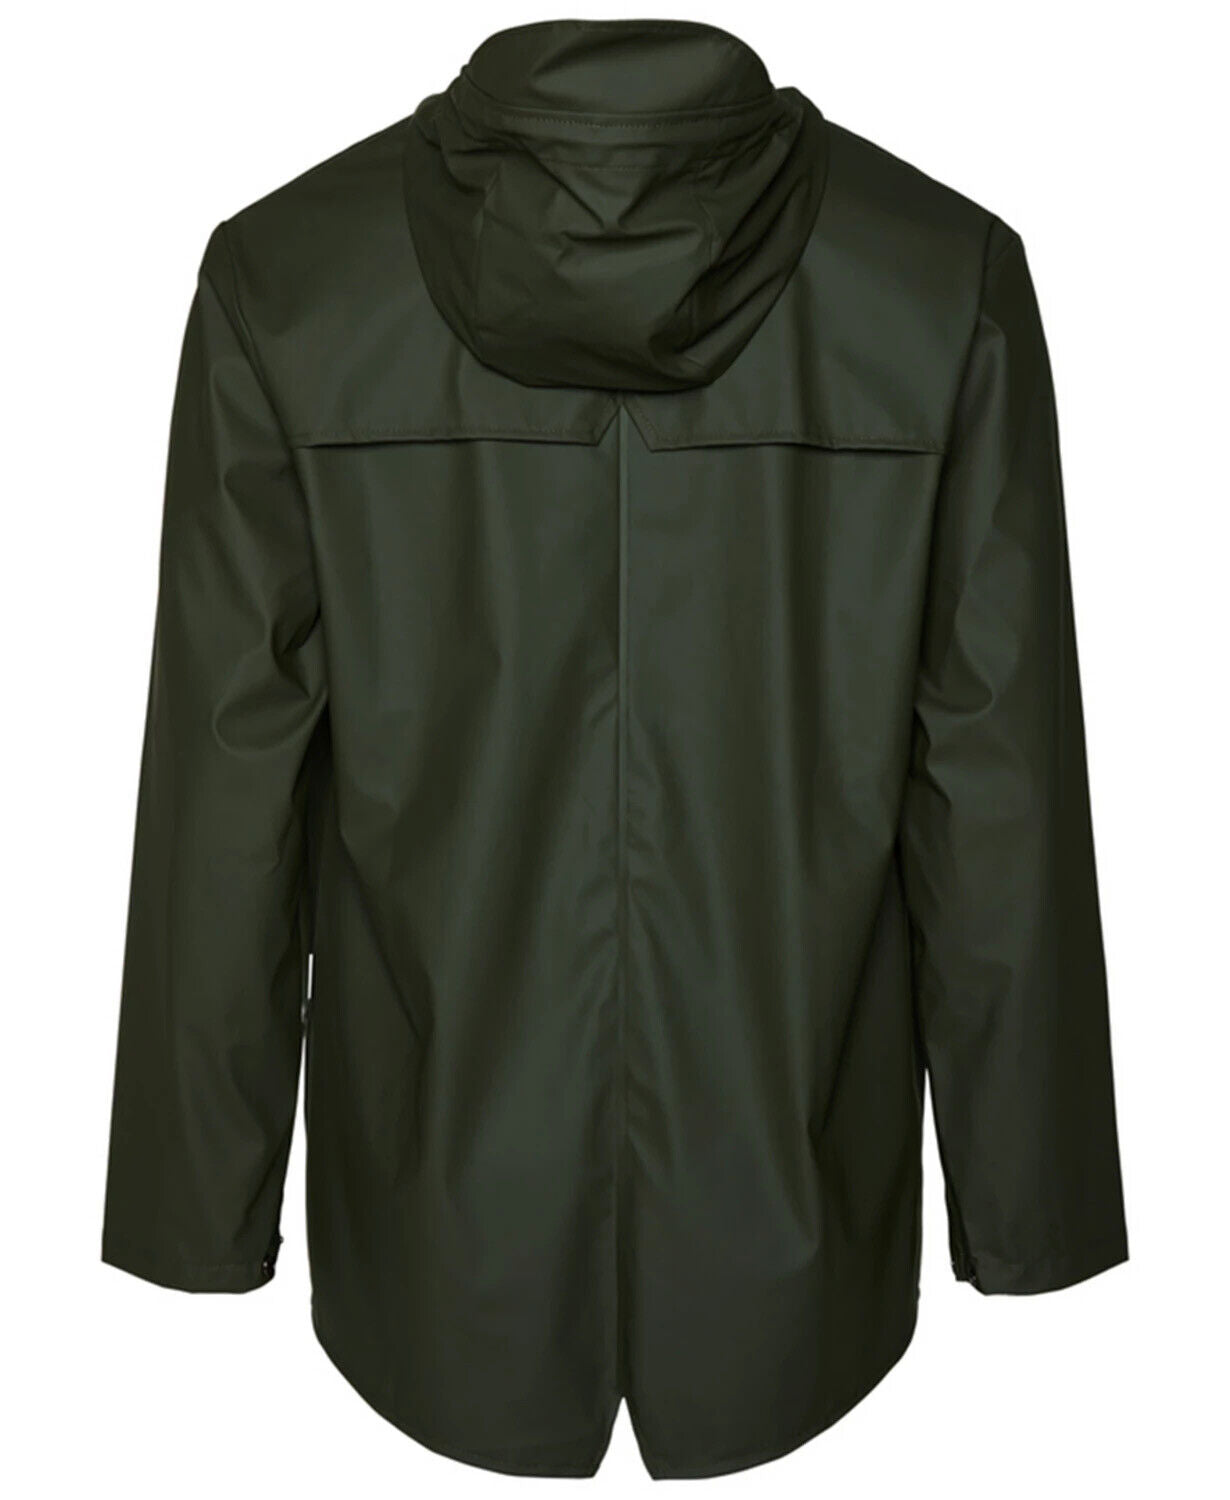 Rains Unisex Short Hooded Raincoat Large / XL Green Coat